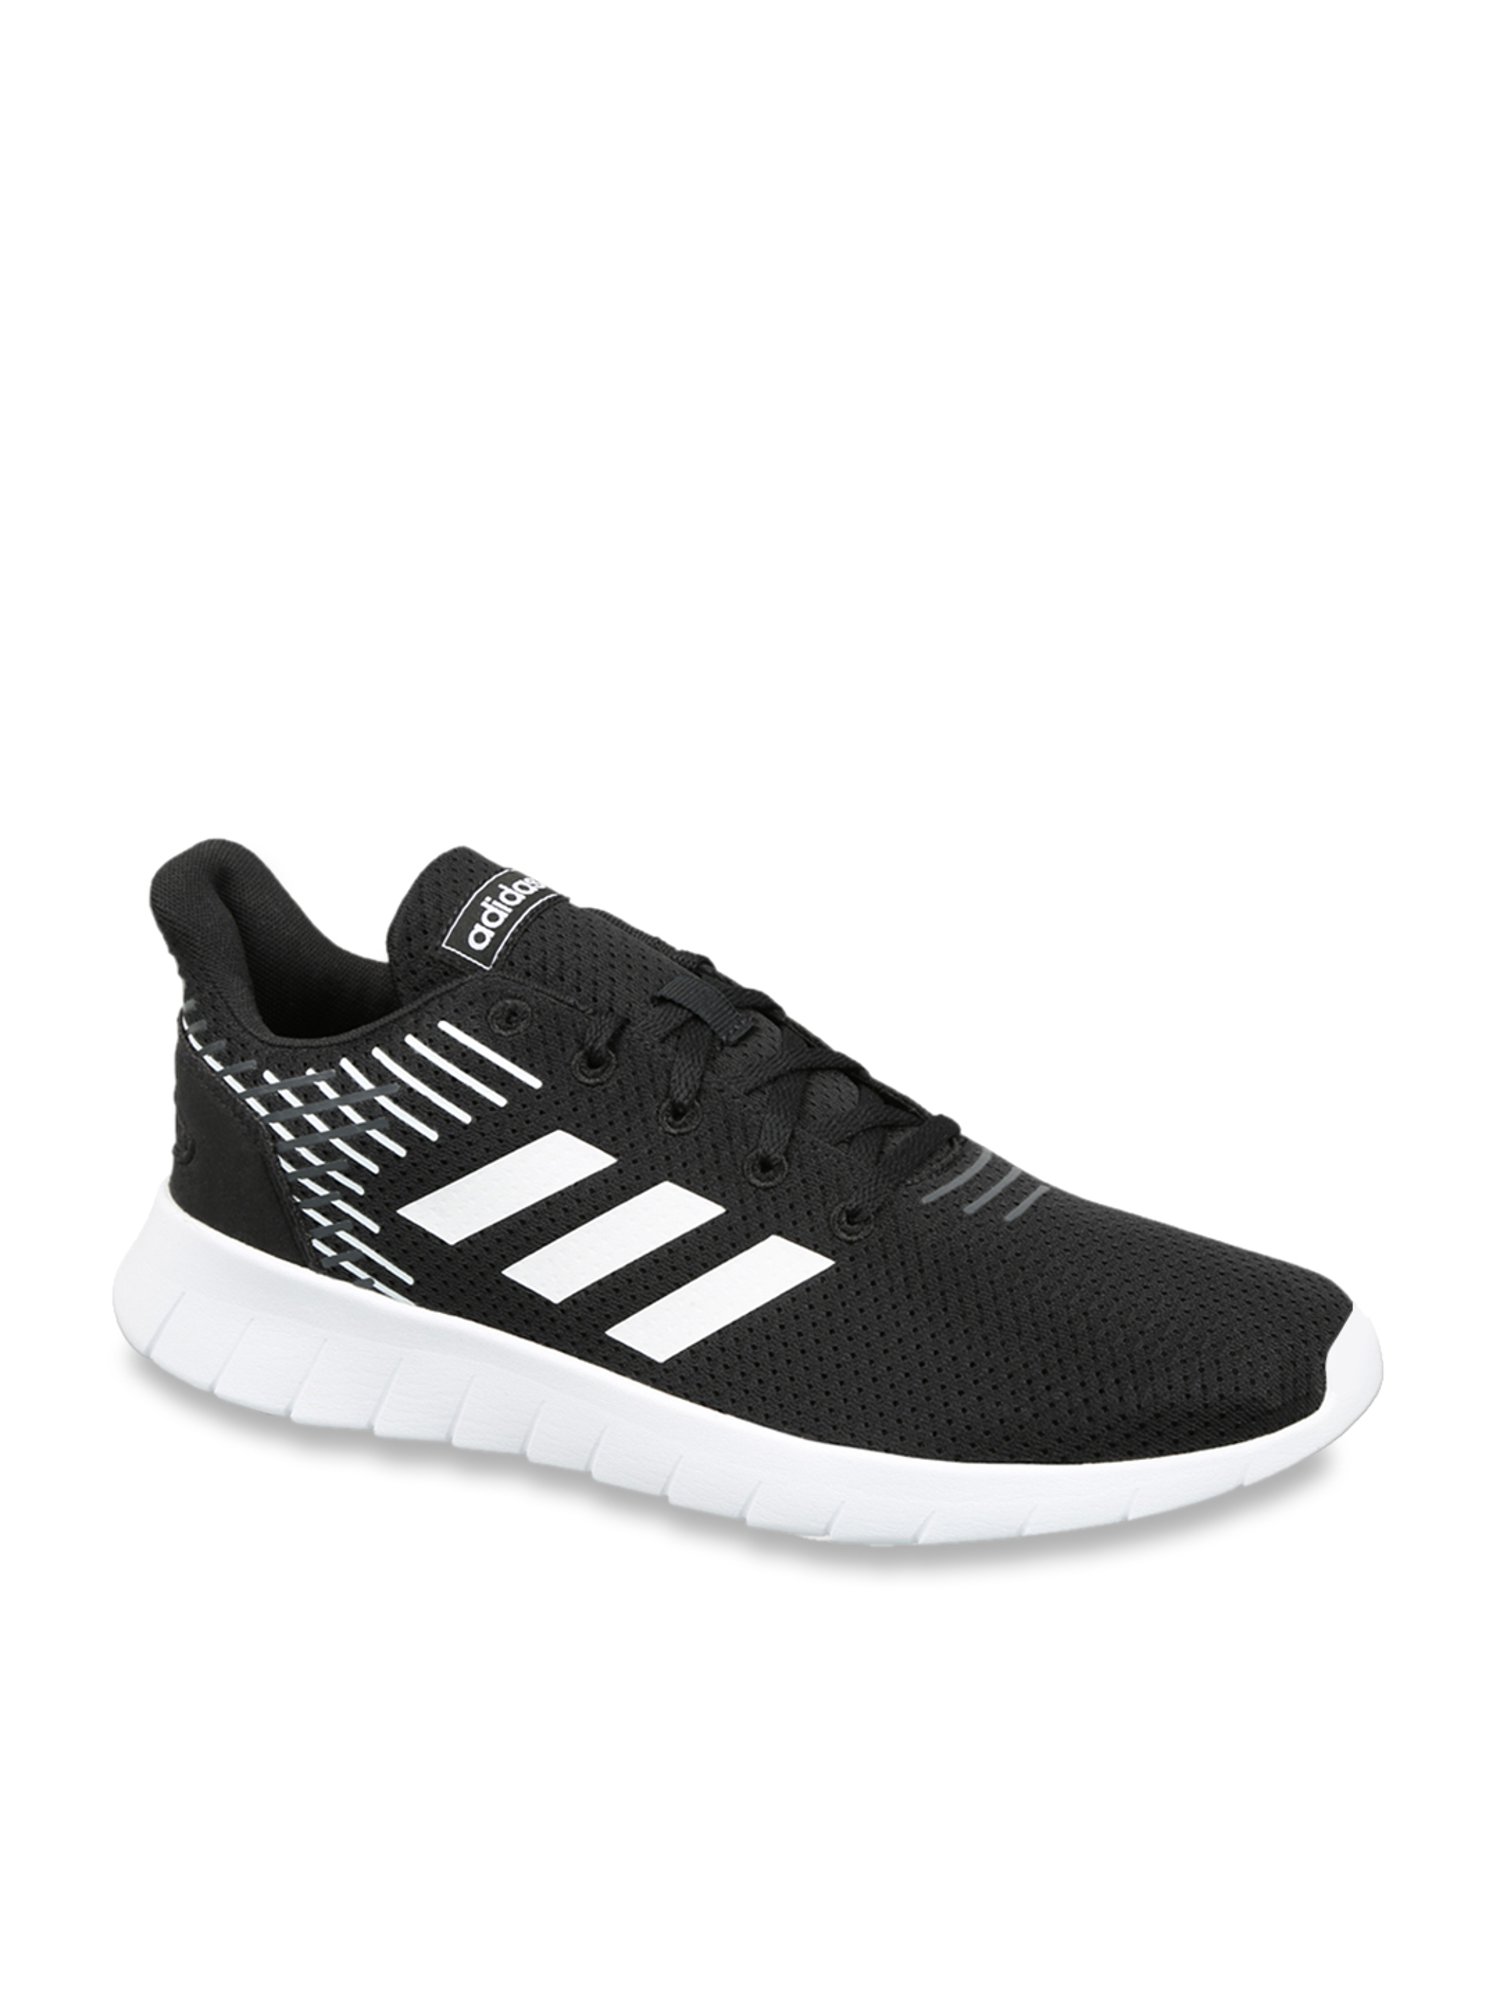 Adidas Asweerun Black Running Shoes 